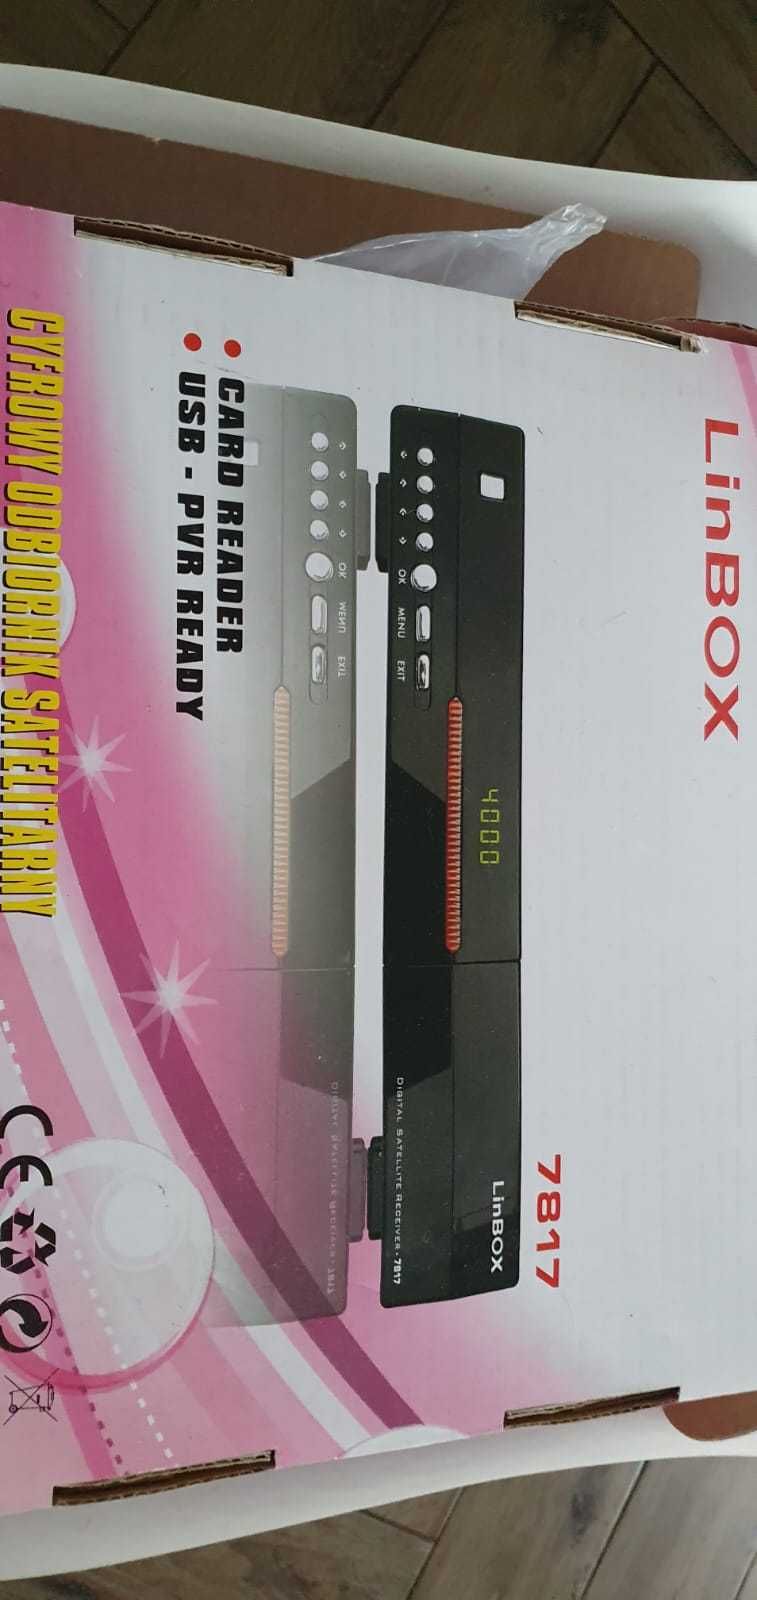 Tuner DVB-S LinBOX 7817